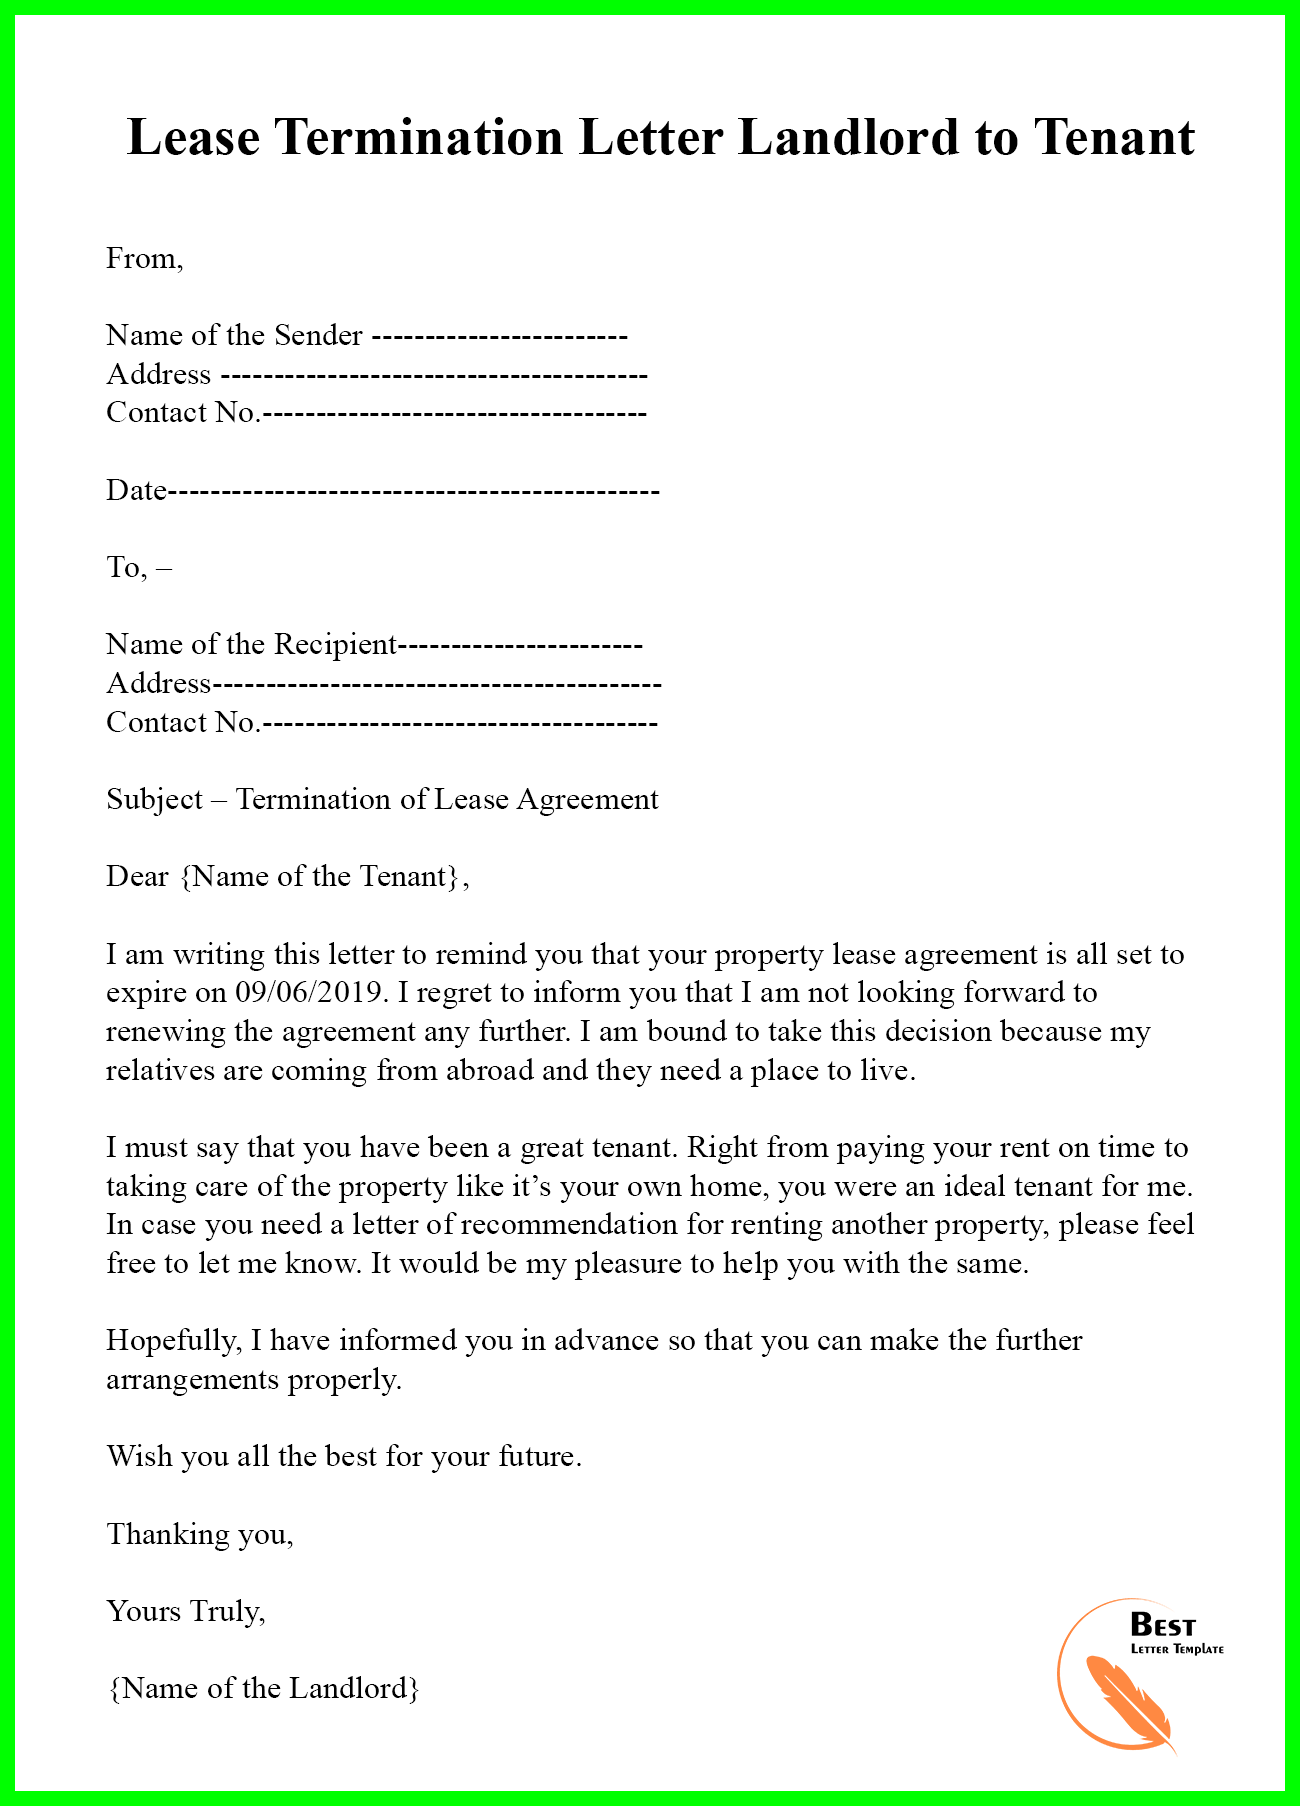 Sample Letter From Landlord To Tenant Regarding Security Deposit from bestlettertemplate.com